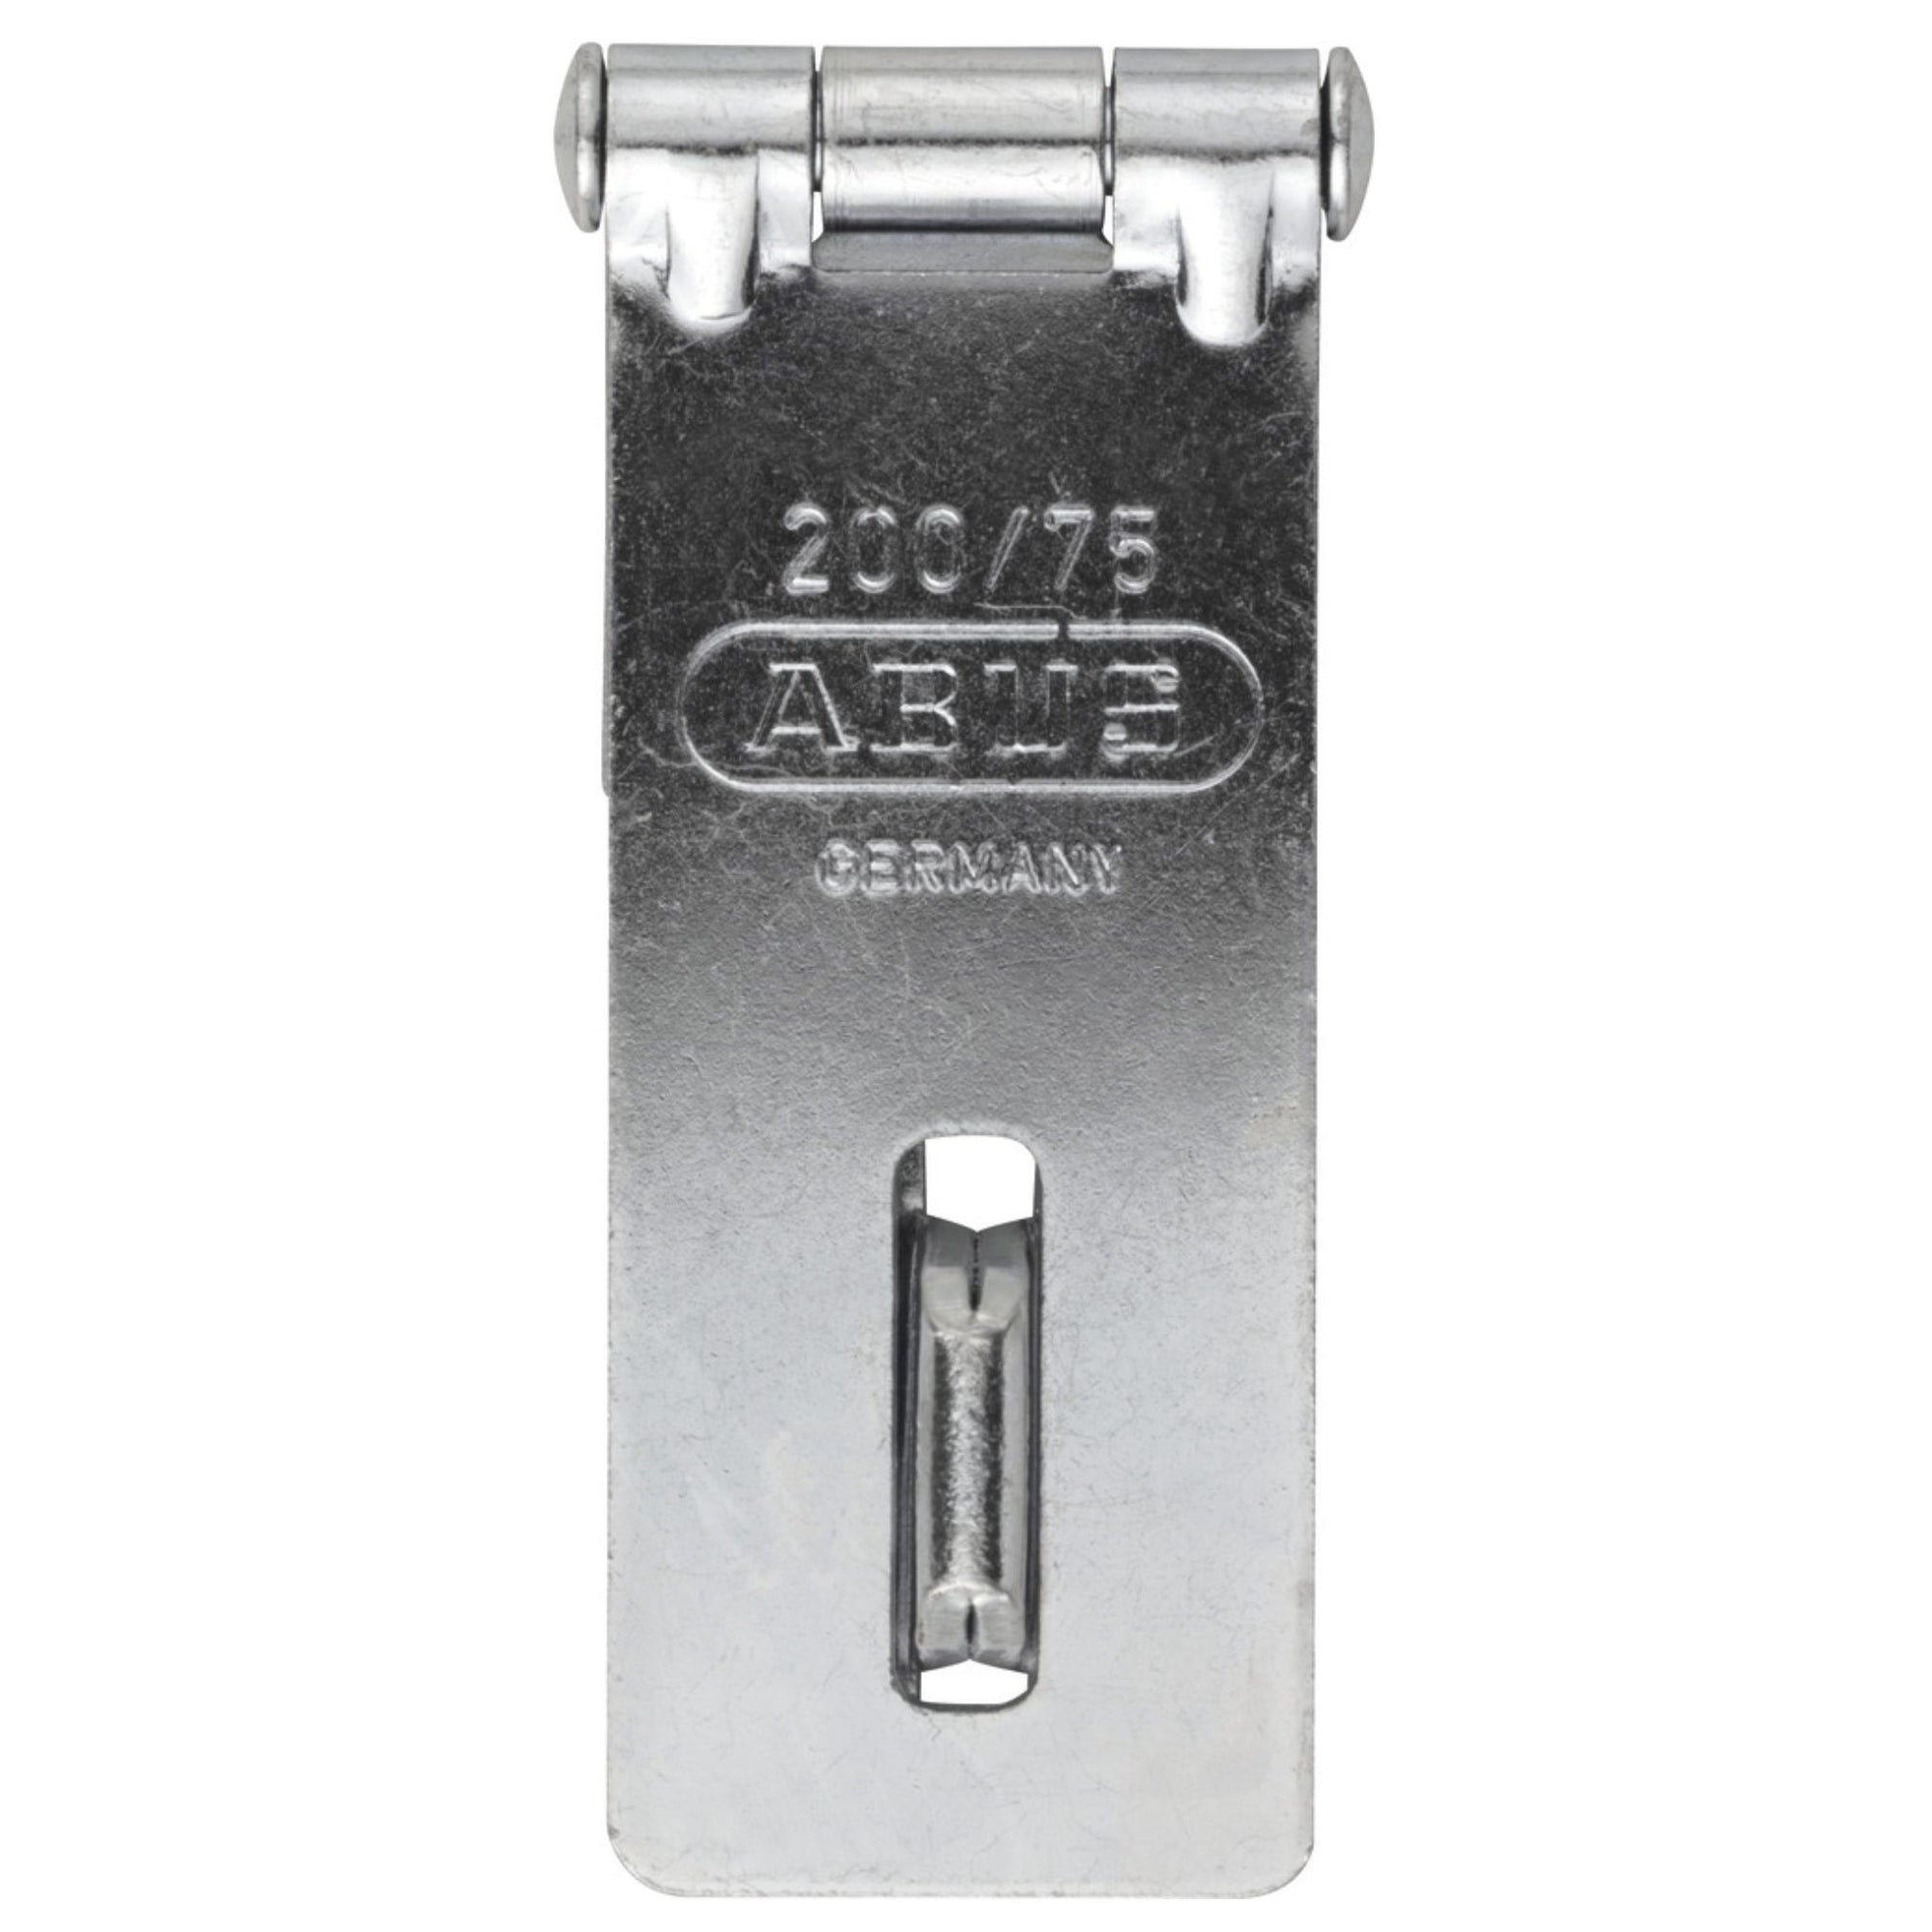 Abus 200 Series Hardened Steel Hasps 200/75 Hasp - The Lock Source